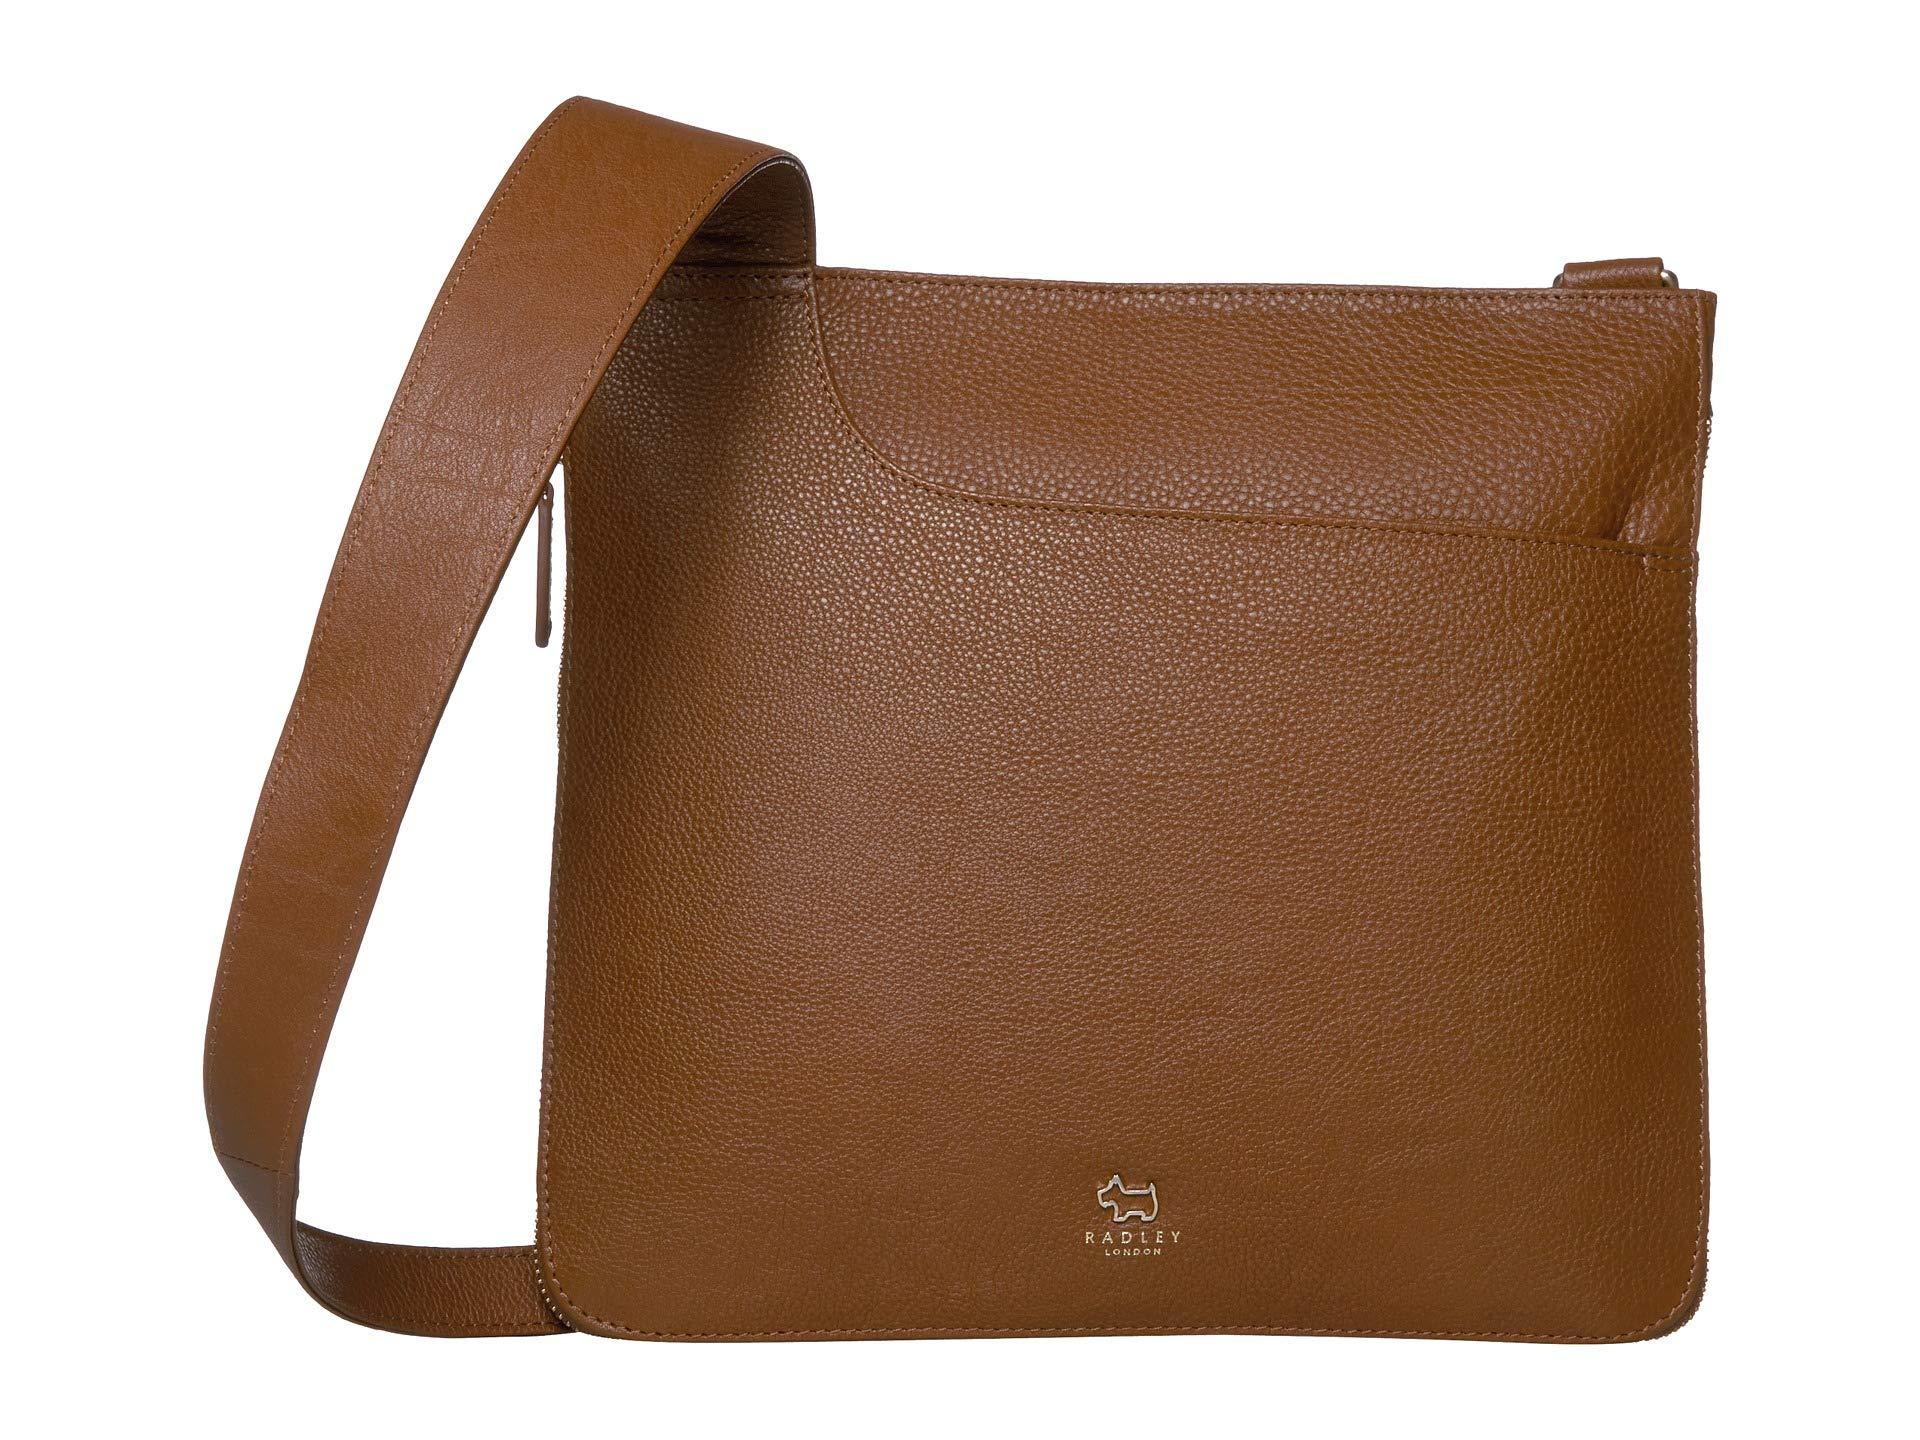 Radley Leather Pockets - Large Zip Around Crossbody Bag in Tan (Brown) - Lyst